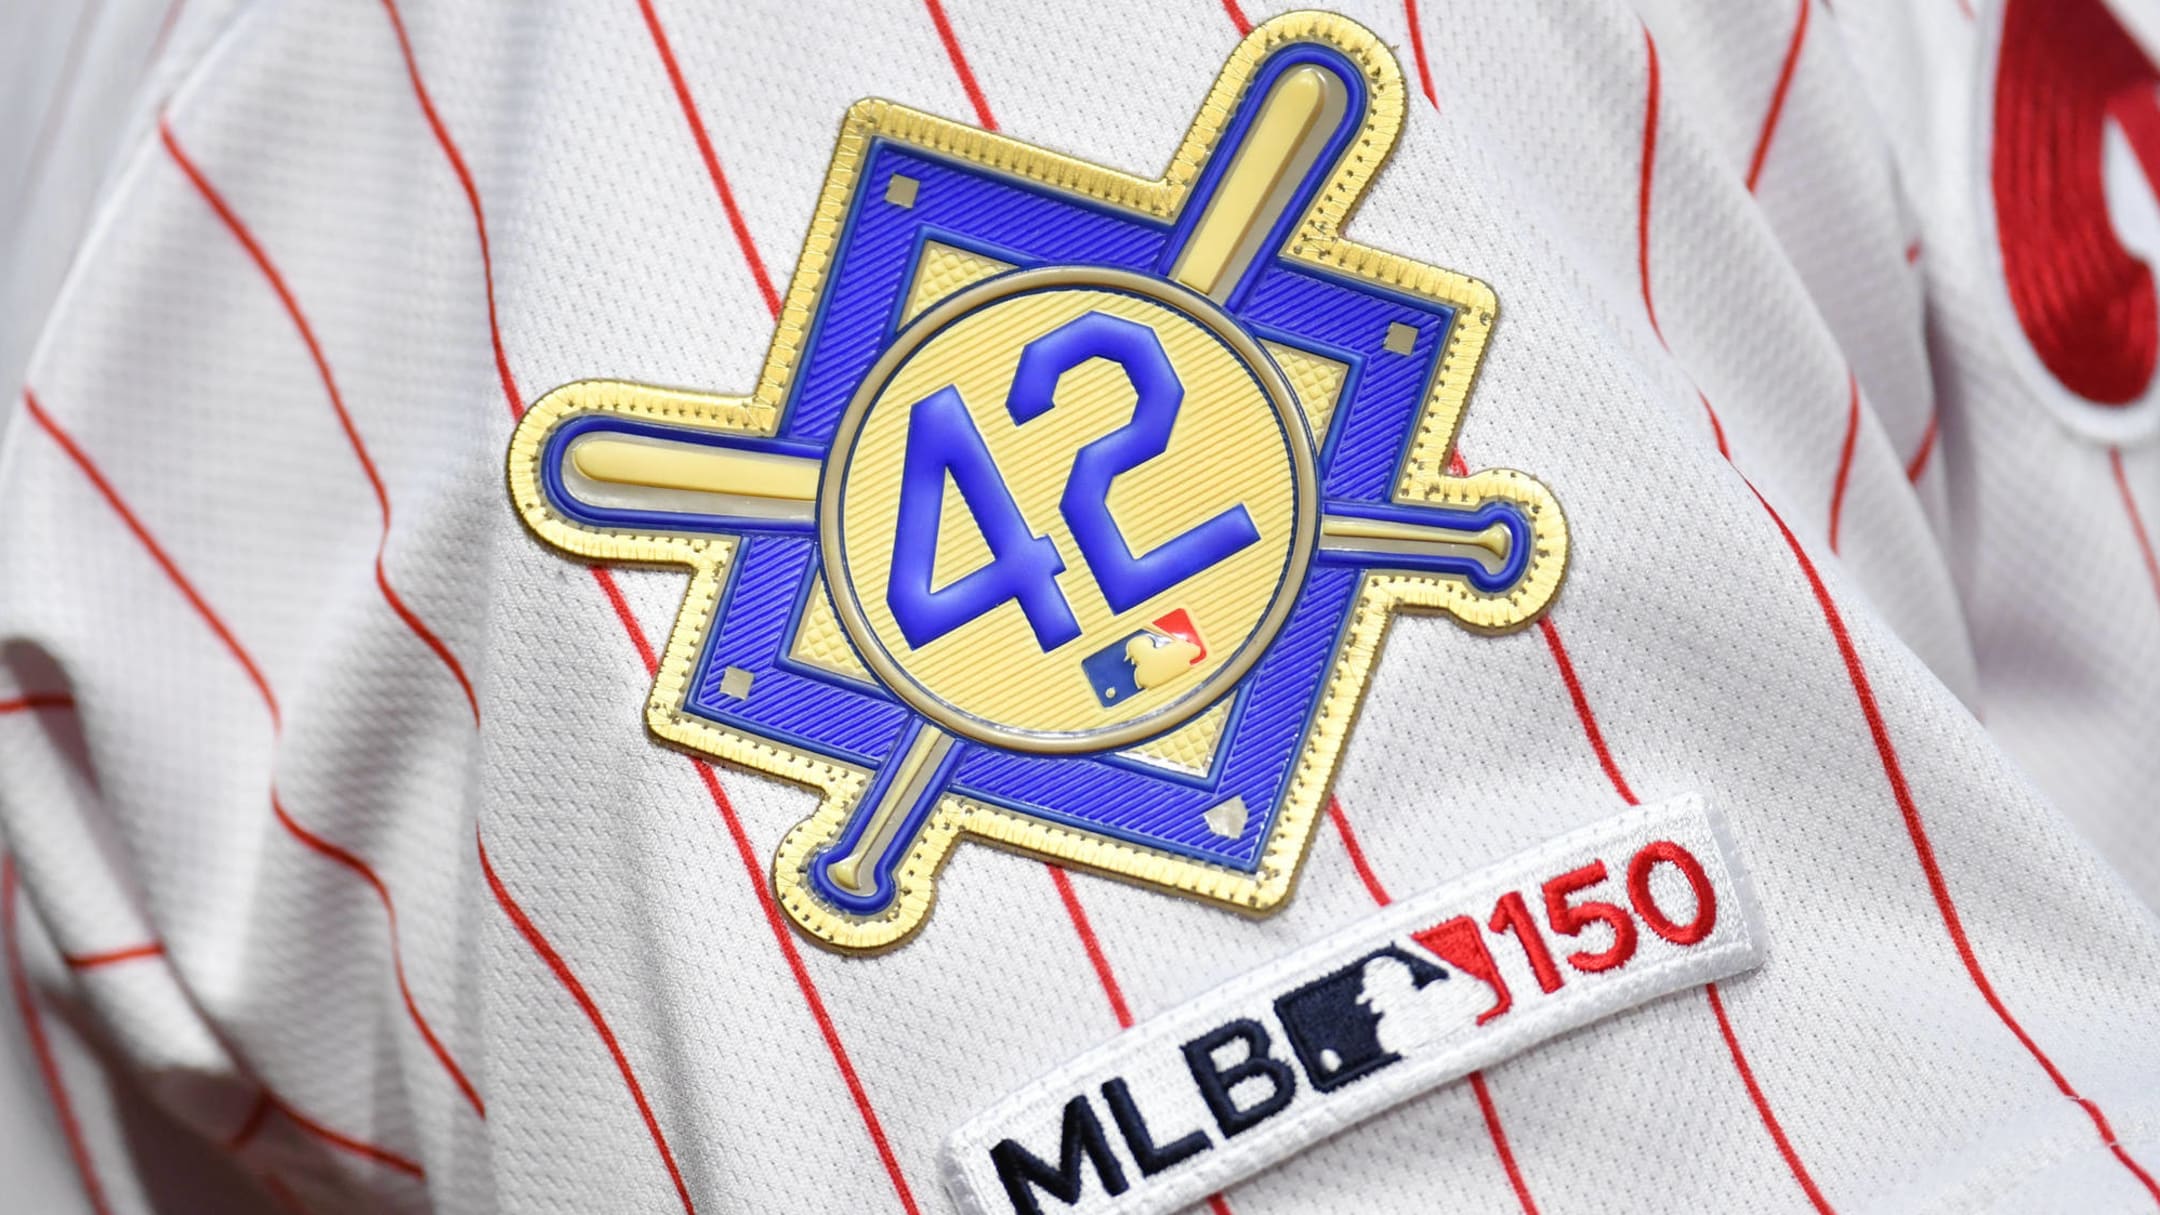 Teams across MLB honor Jackie Robinson's 'eternal' impact